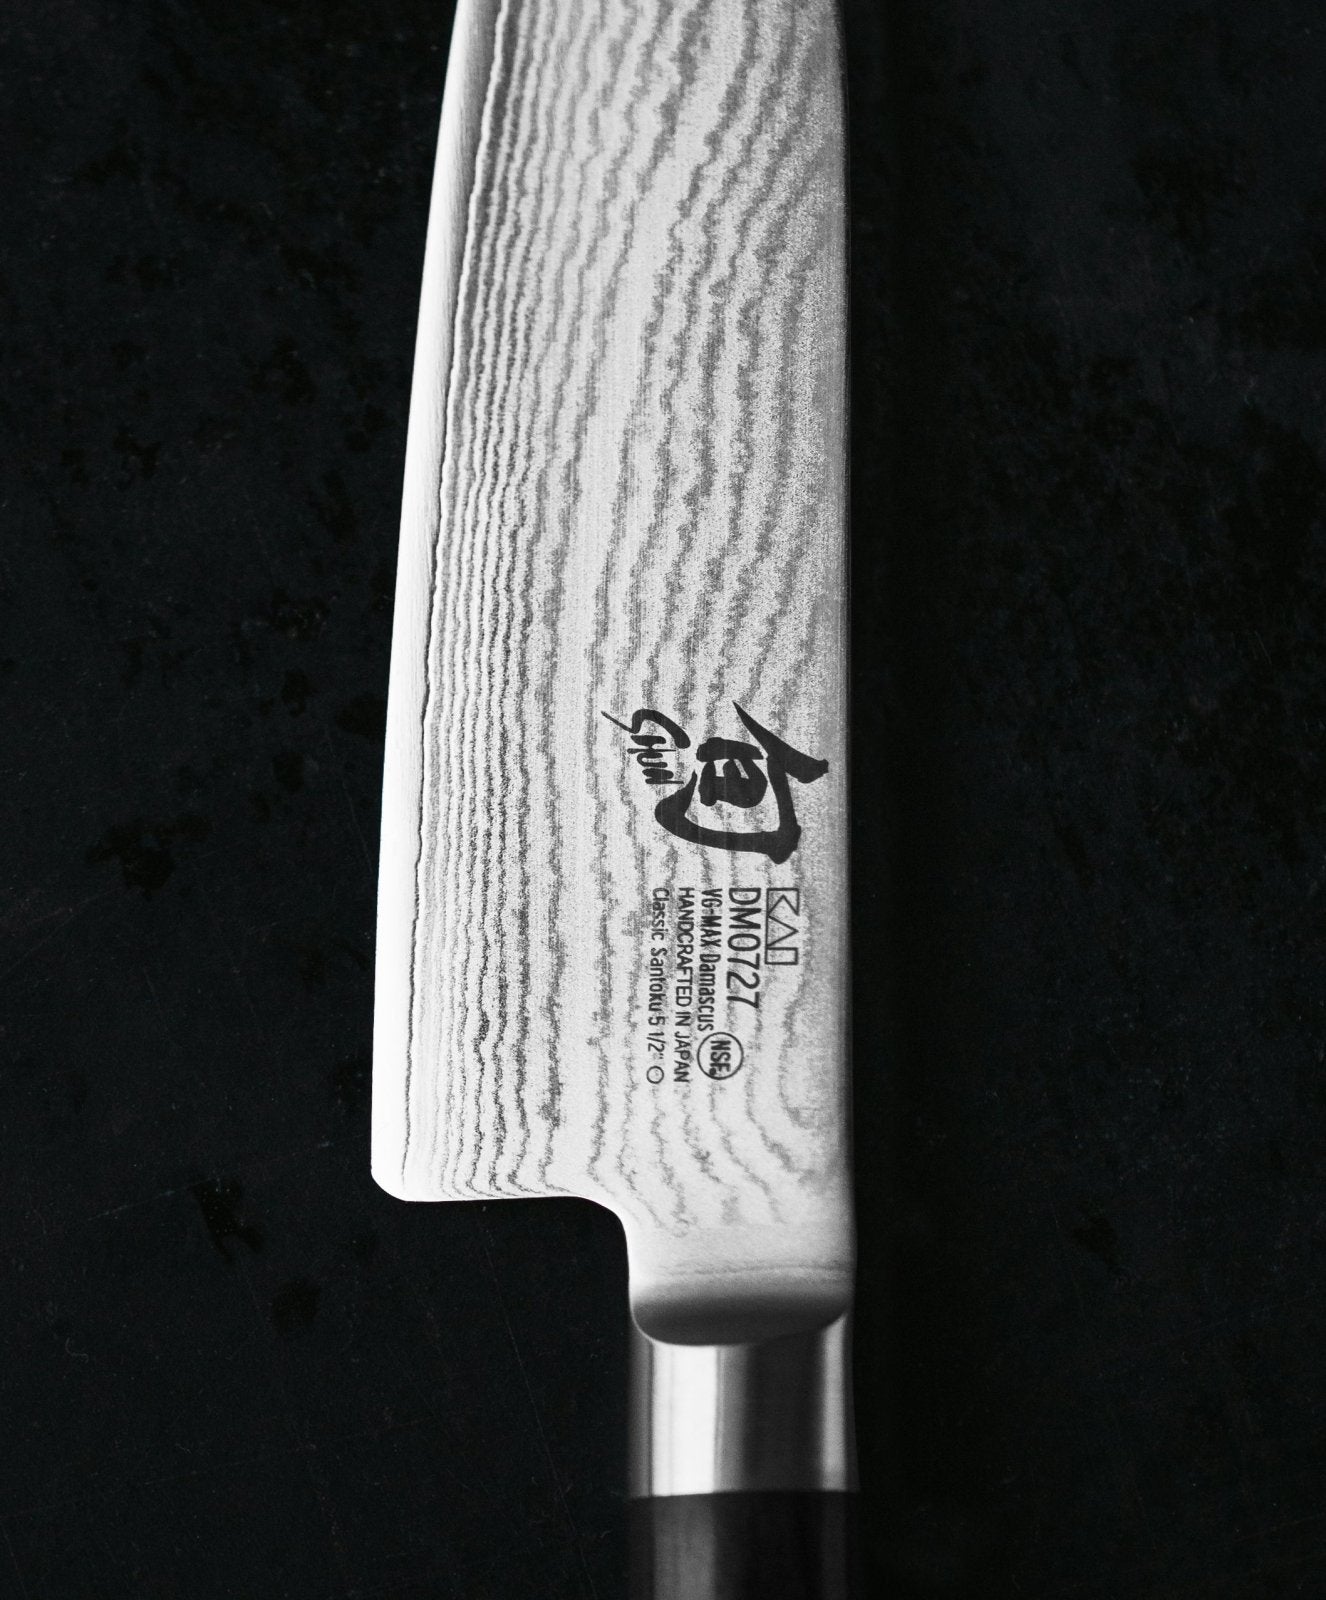 KAI Shun 20cm Chefs Knife - KAI-DM-0706 - The Cotswold Knife Company